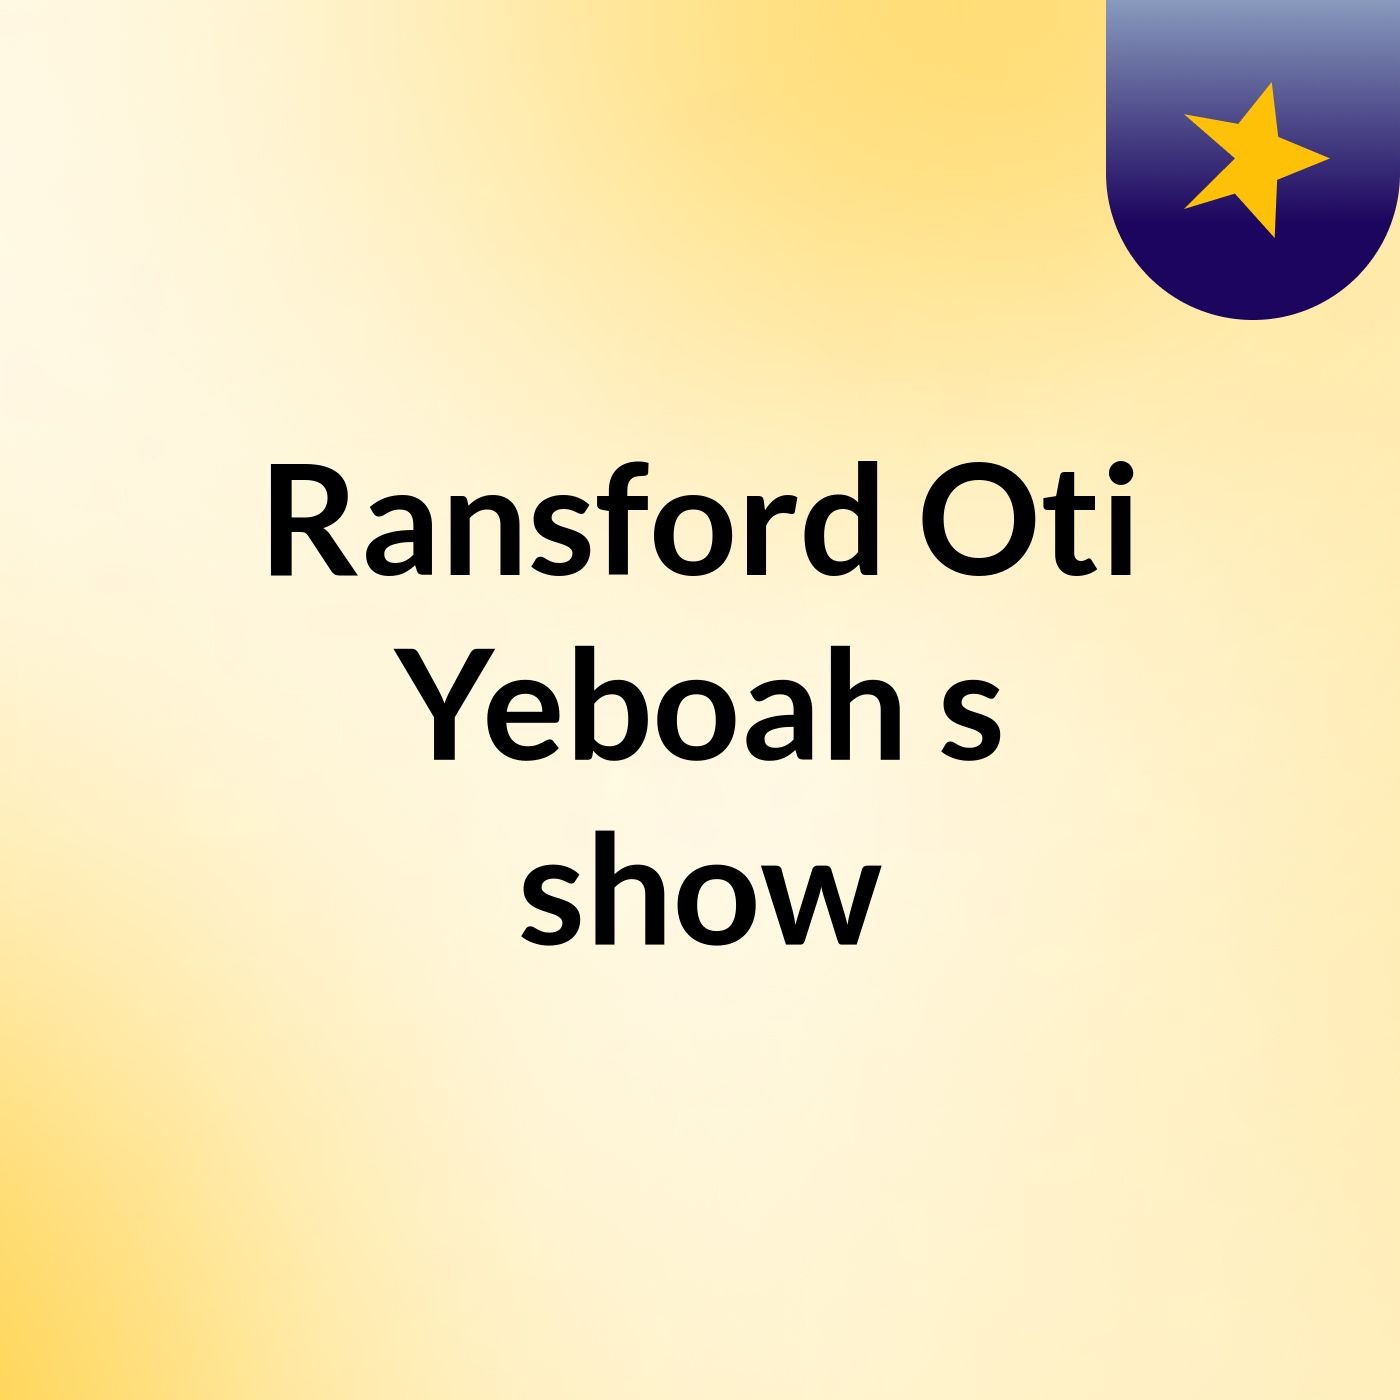 Ransford Oti Yeboah's show